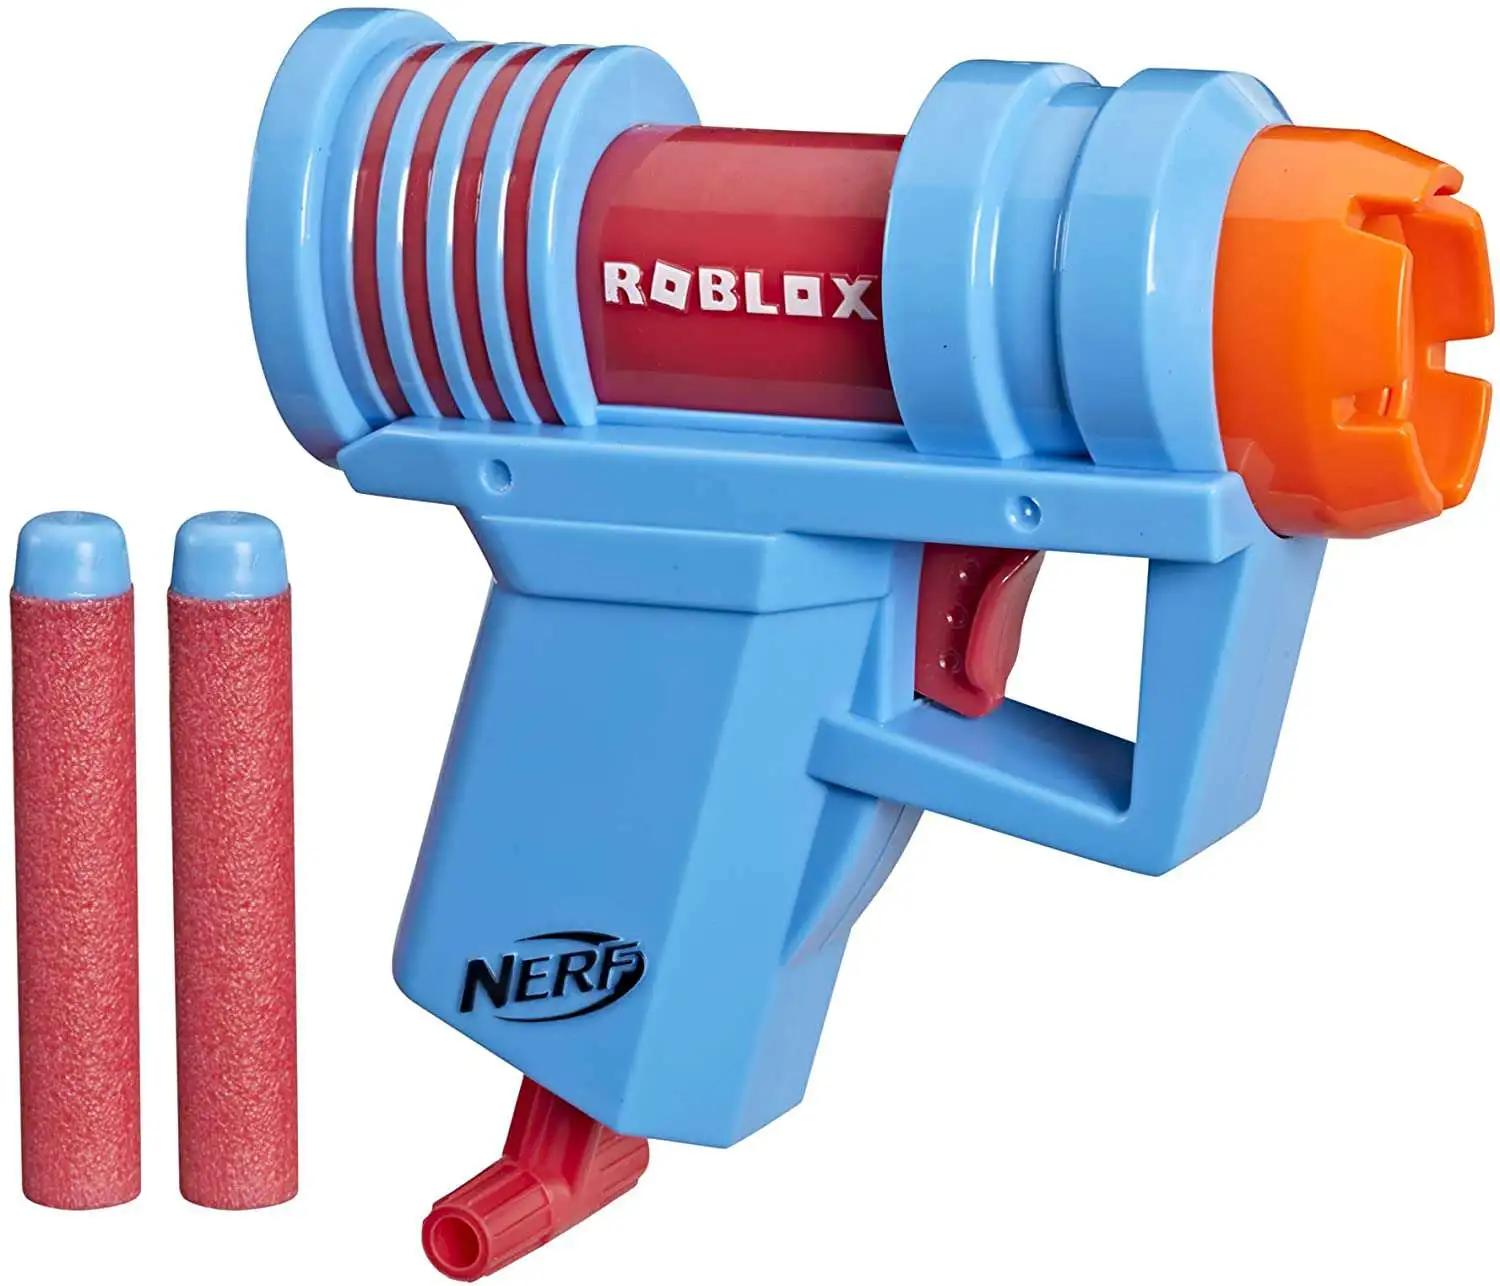 Nerf Roblox Spacelock Ray Dart Blaster Toy Hasbro Toys - ToyWiz